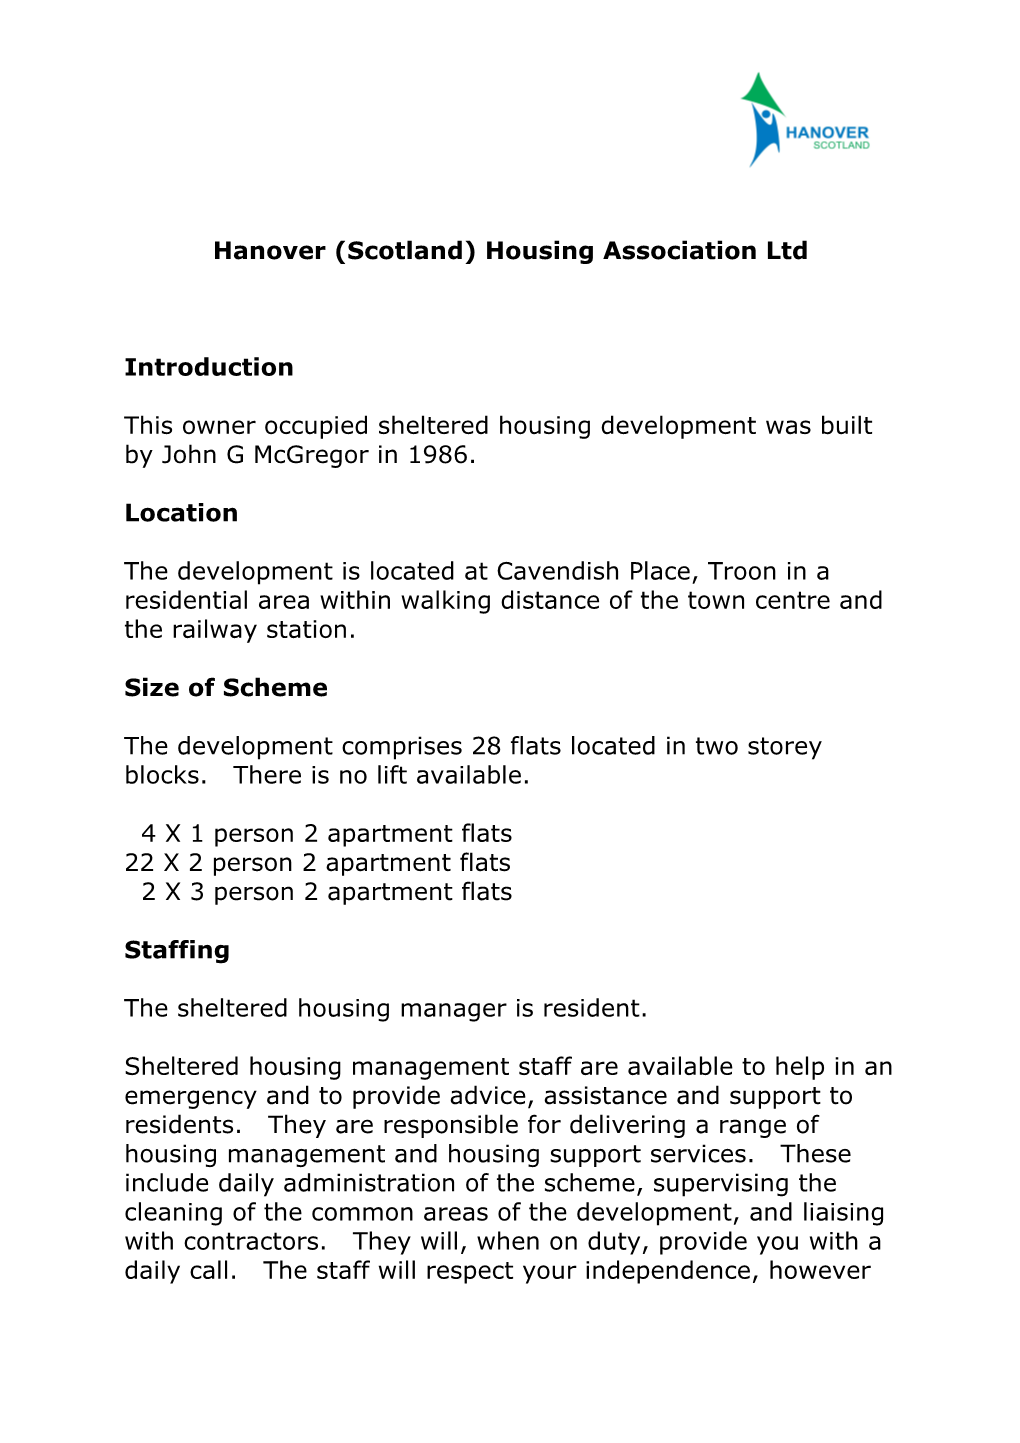 Hanover (Scotland) Housing Association Ltd s5